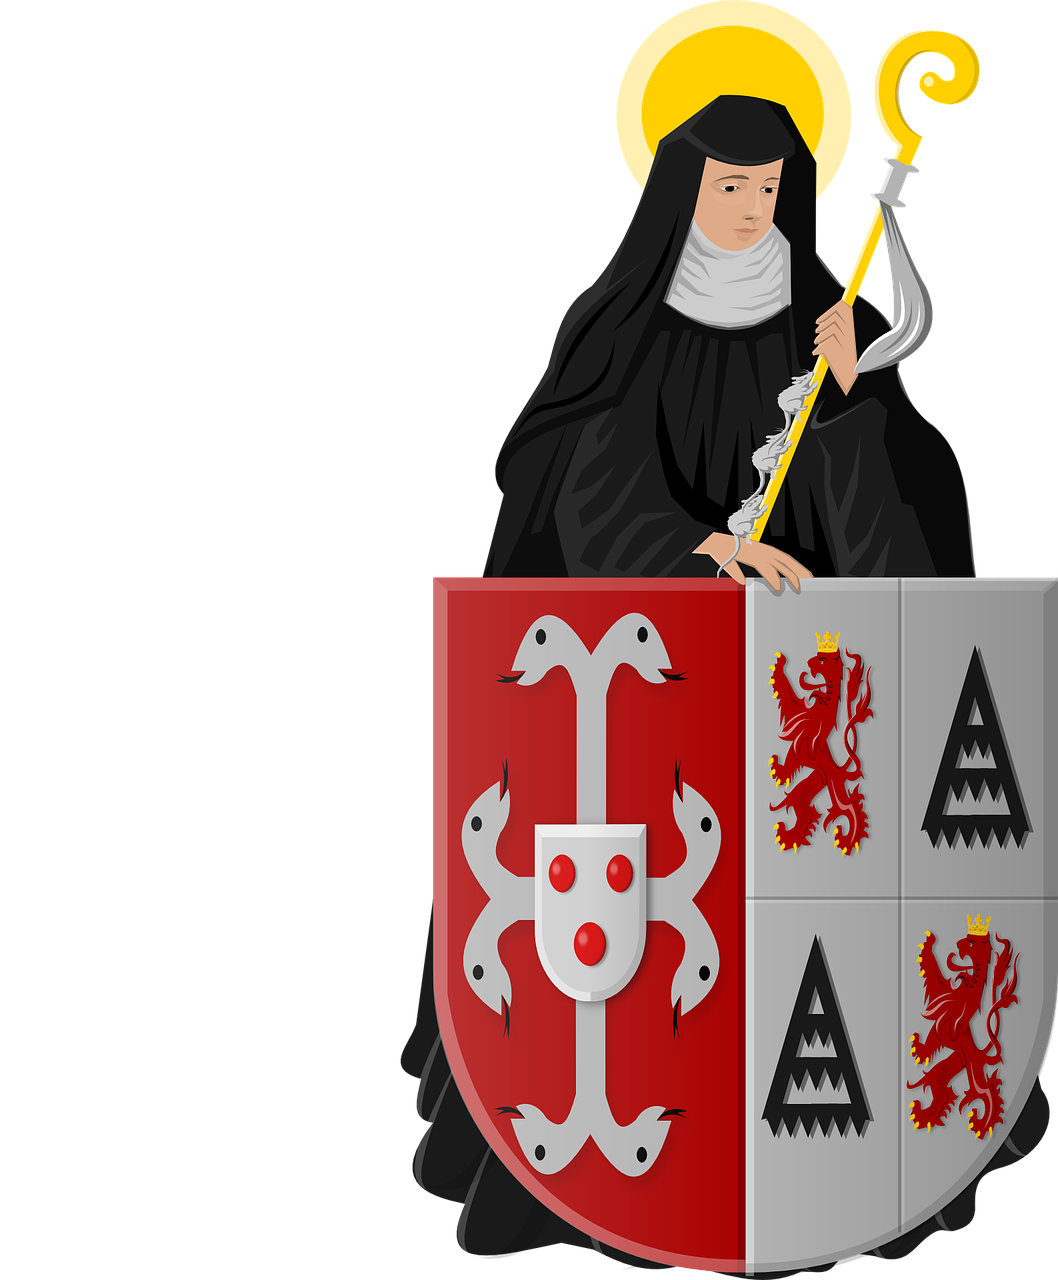 amstenrade coat of arms municipality free photo